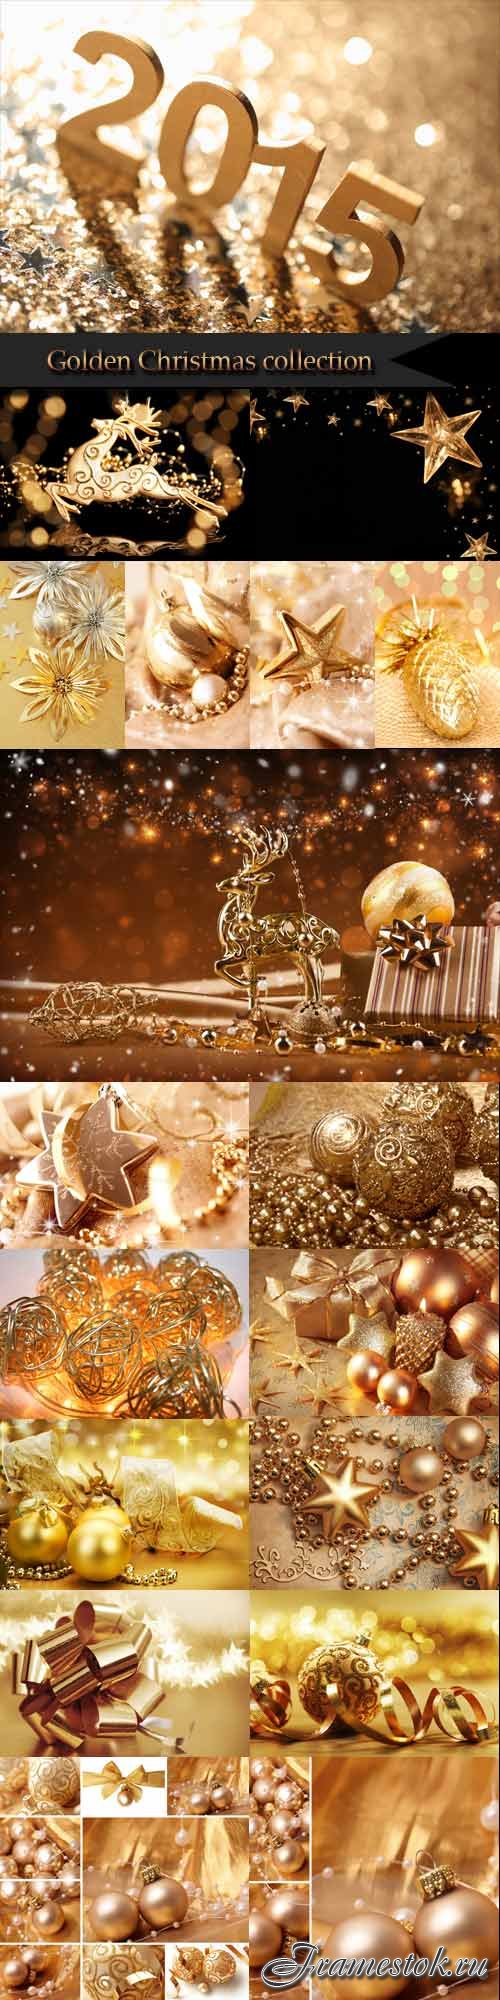 Golden Christmas collection